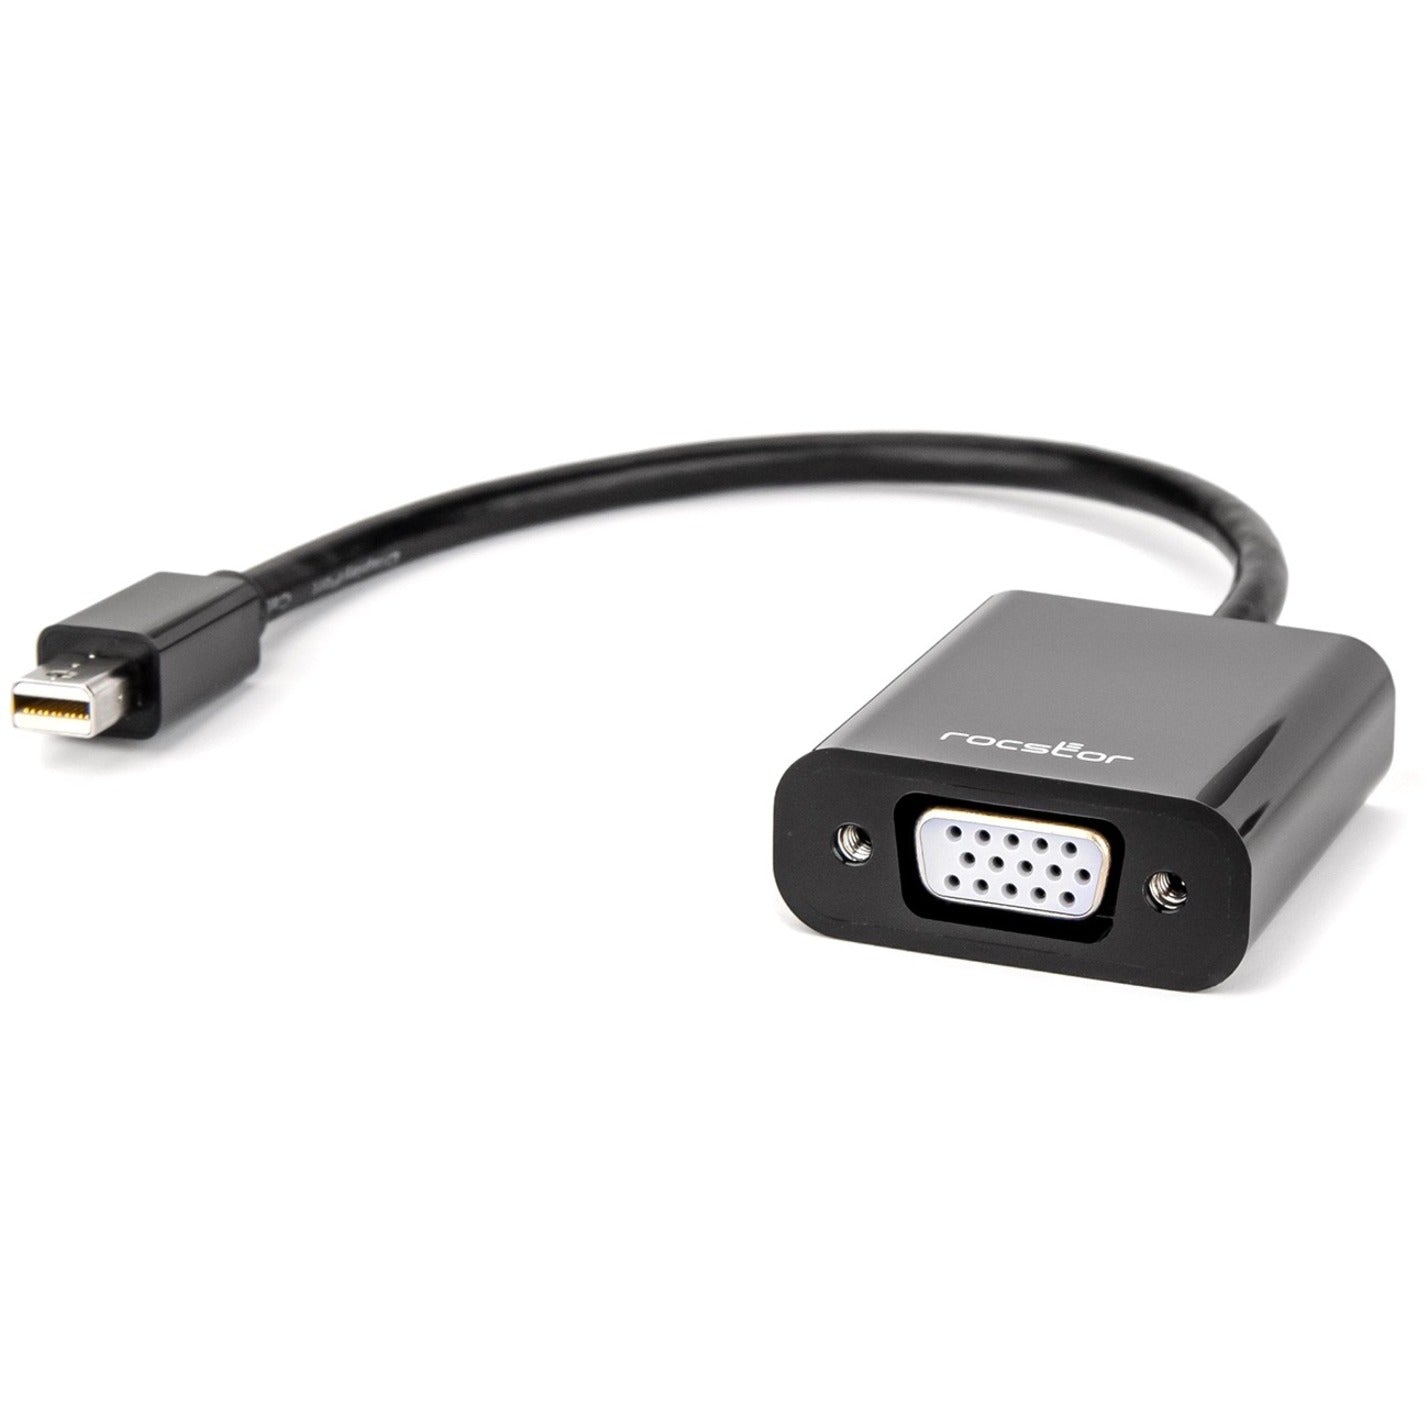 Rocstor Y10A199-B1 Premium Mini DisplayPort to VGA Video Adapter 6" Cable Black